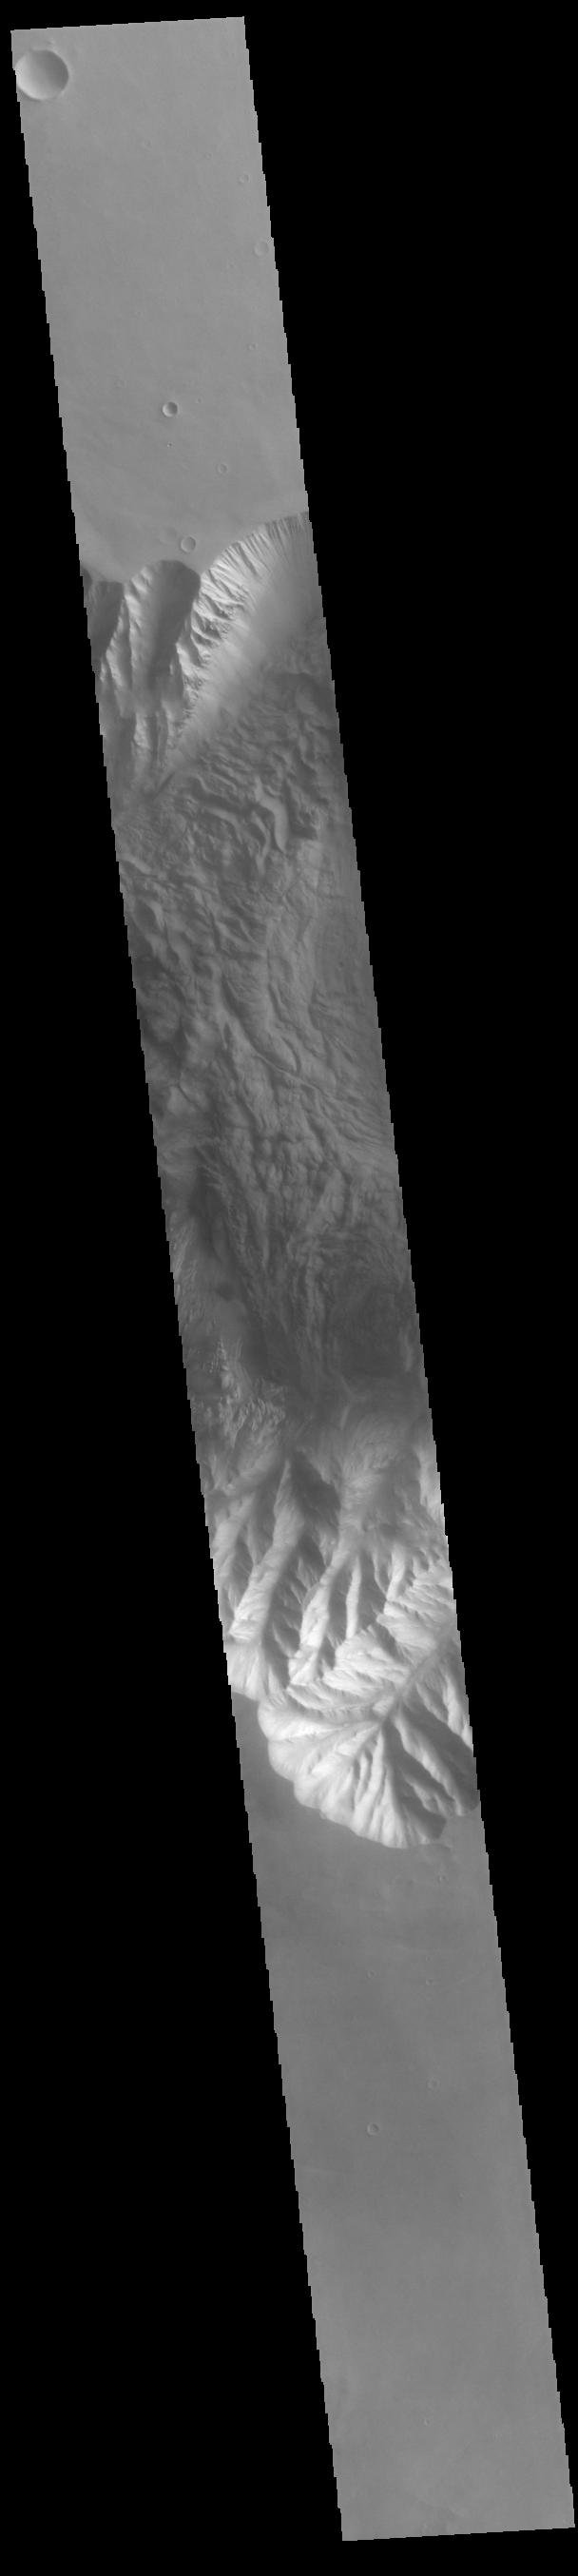 PIA25105: Eastern Hebes Chasma